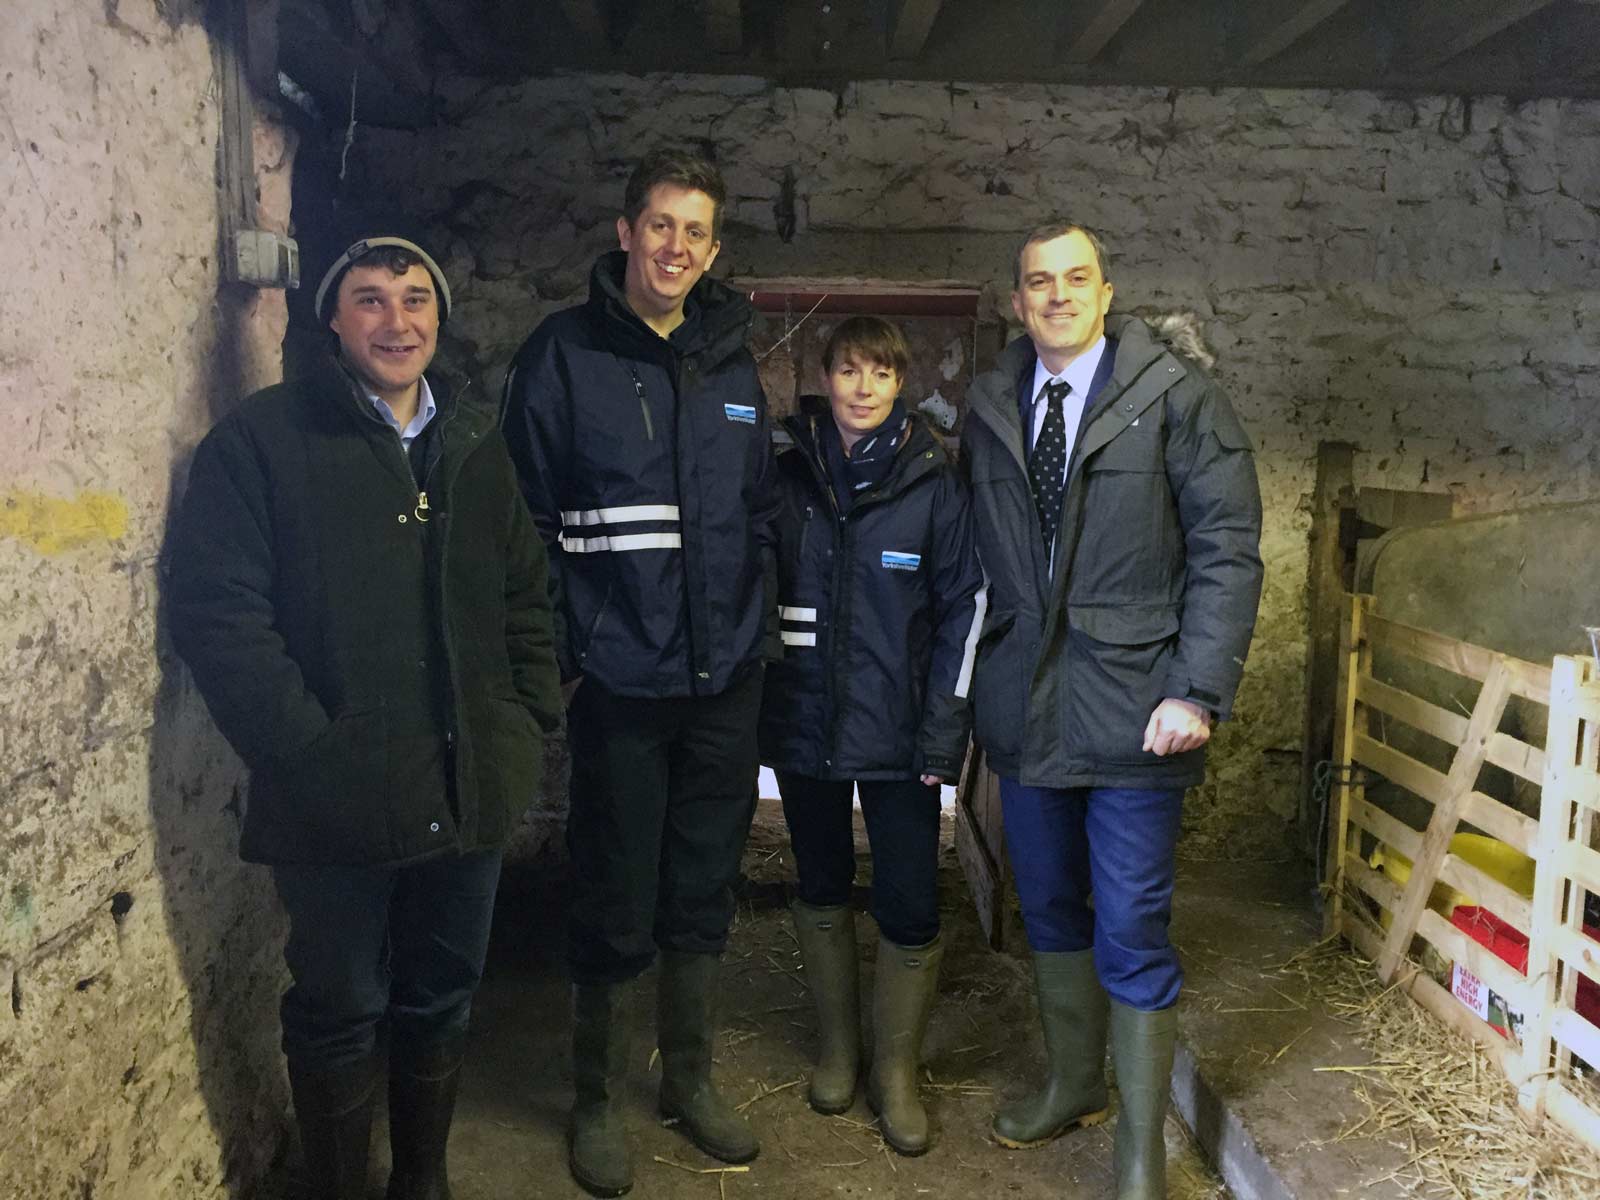 Julian Smith MP visits Humberstone Bank Farm